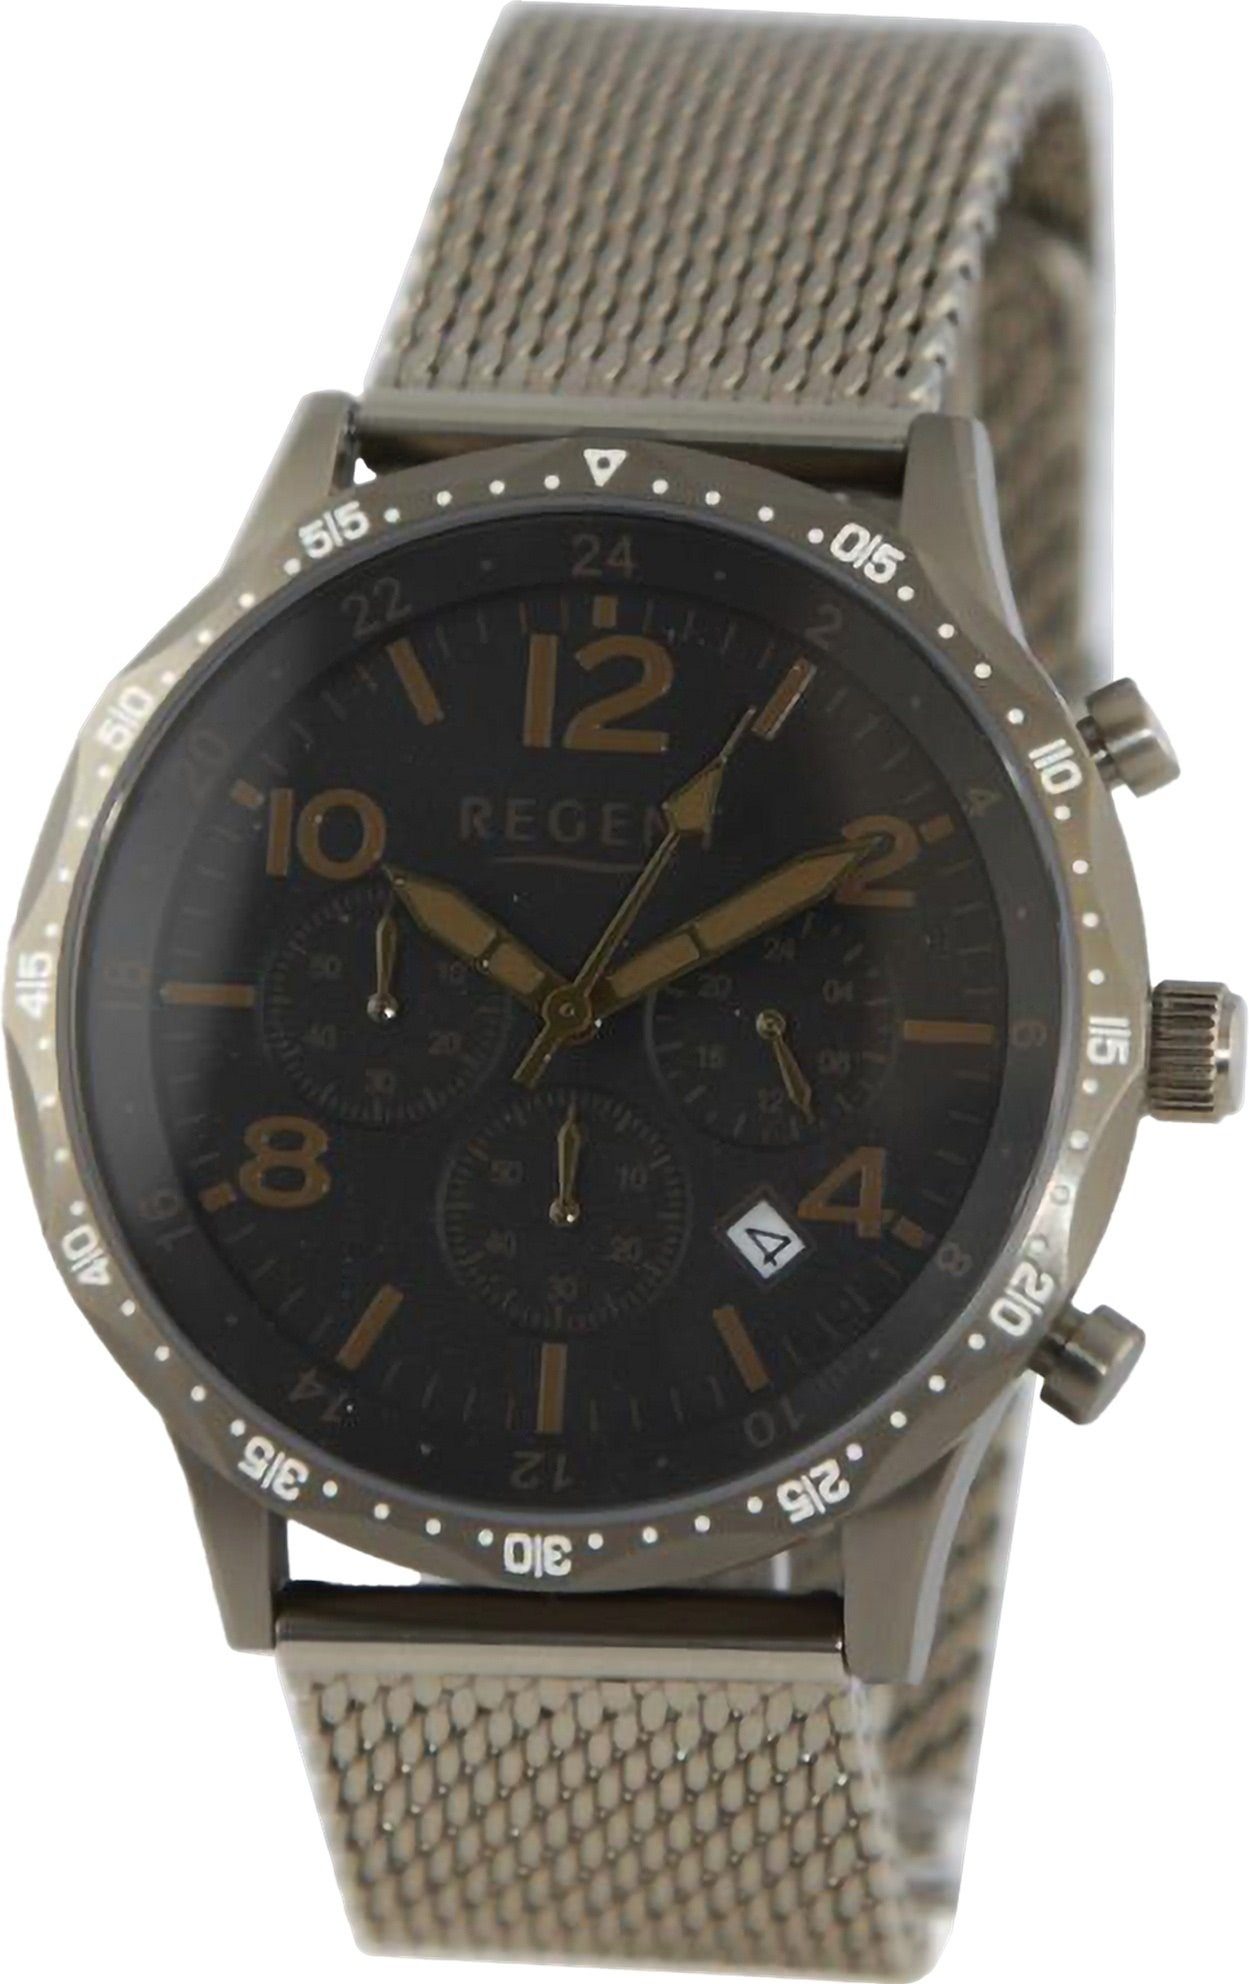 Regent Quarzuhr Regent Herren Armbanduhr Analog, Herren Armbanduhr rund, extra groß (ca. 44mm), Metallarmband